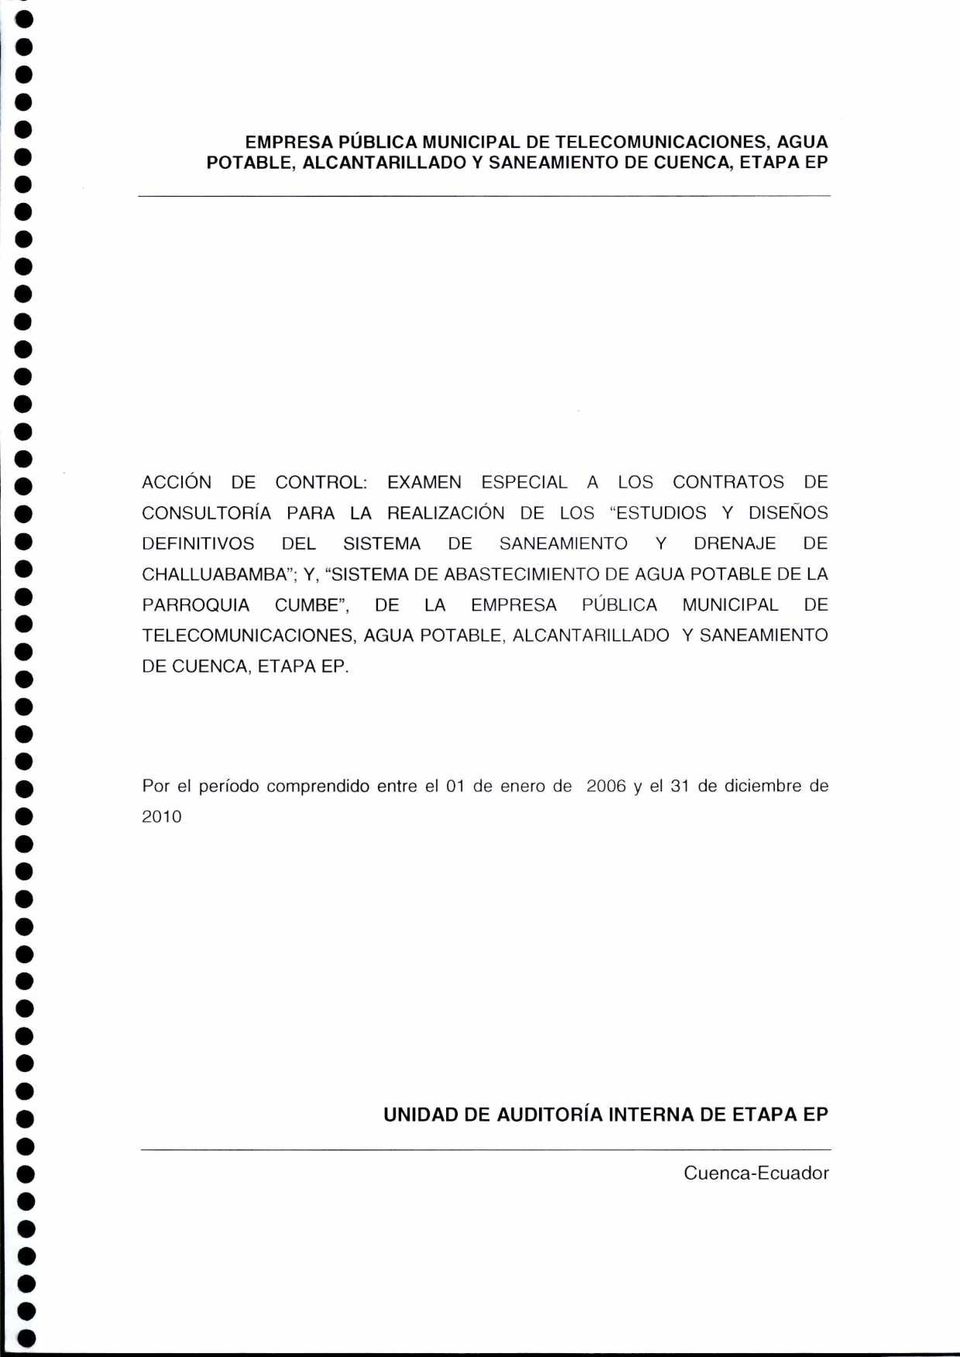 "SISTEMA DE ABASTECIMIENTO DE AGUA POTABLE DE LA PARROQUIA CUMBE", DE LA EMPRESA PÚBLICA MUNICIPAL DE TELECOMUNICACIONES, AGUA POTABLE, ALCANTARILLADO